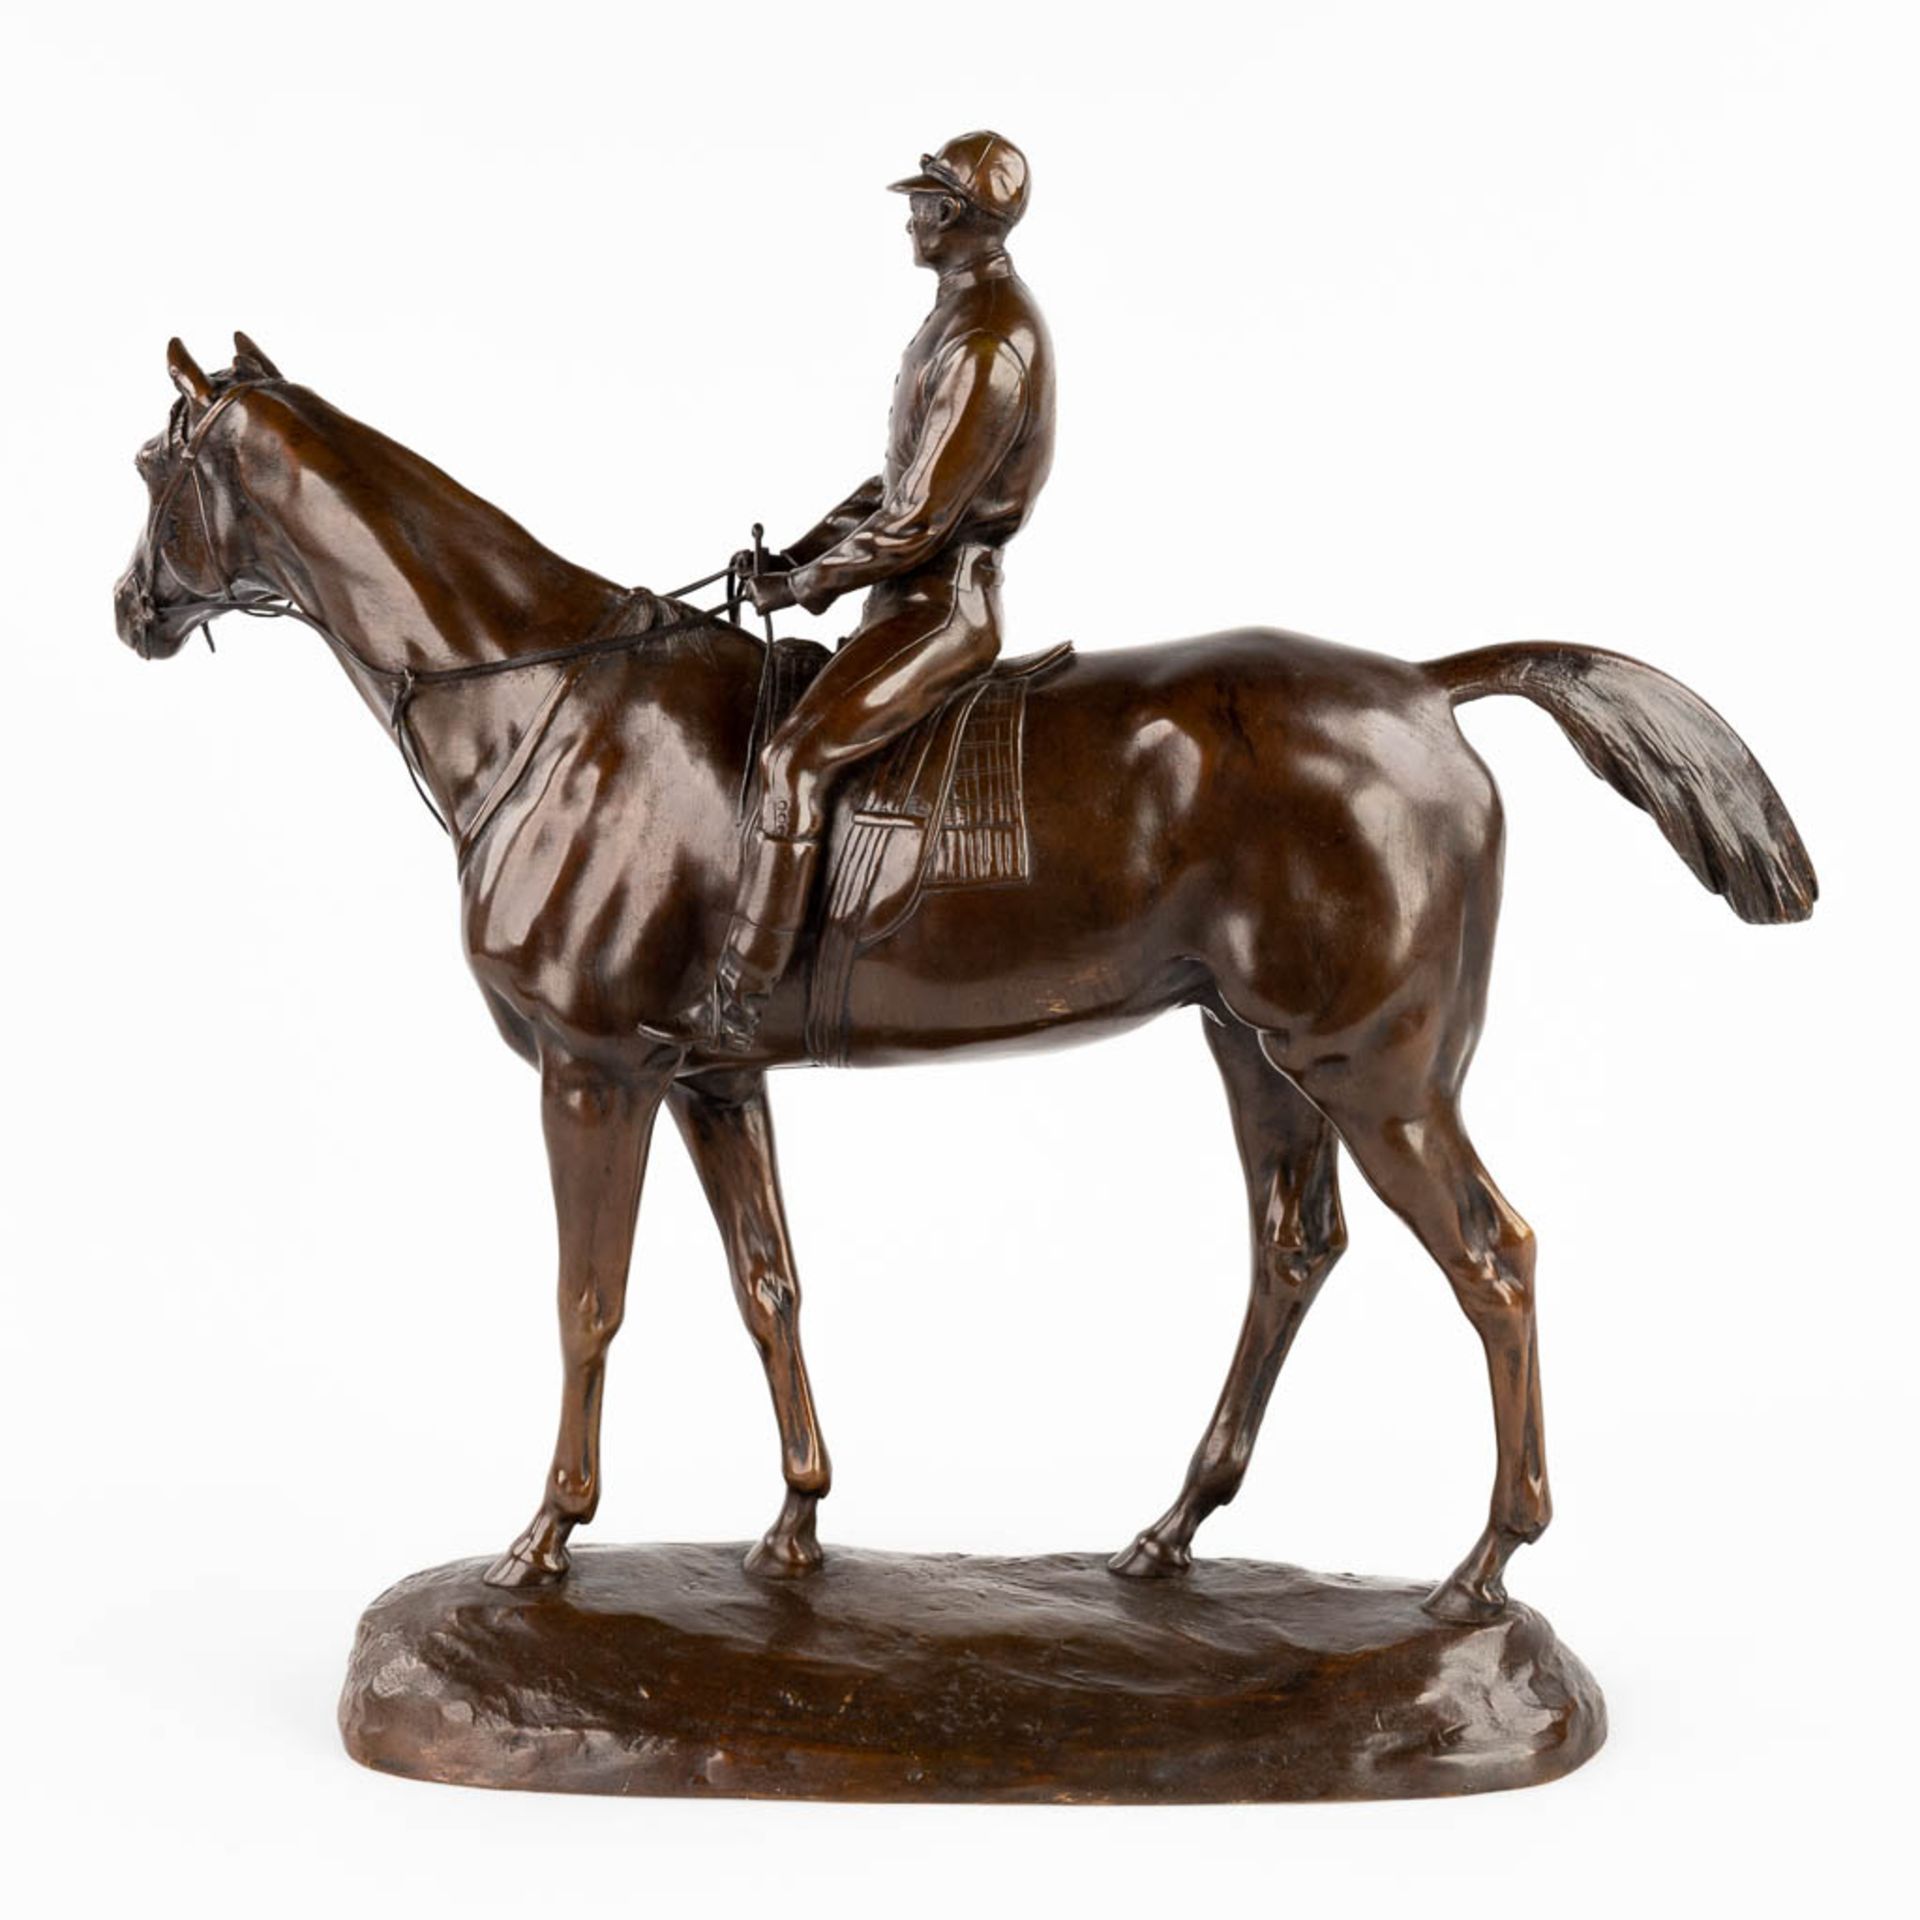 Paul COMOLÉRA (1818-c.1897) 'Horse with rider' patinated bronze. (L: 12 x W: 50 x H: 46 cm) - Bild 5 aus 10